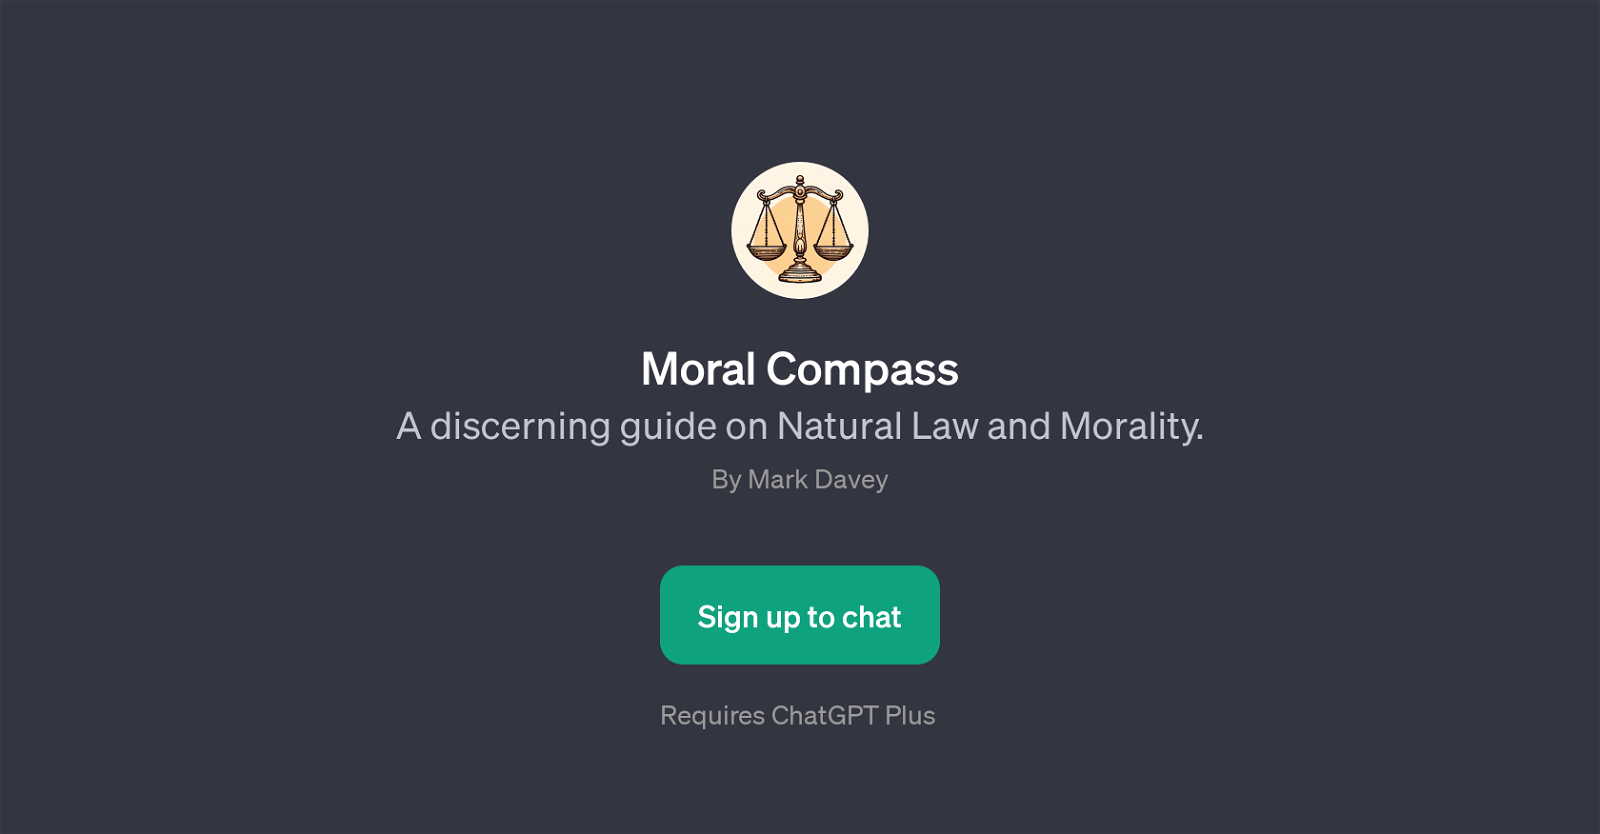 Moral Compass website